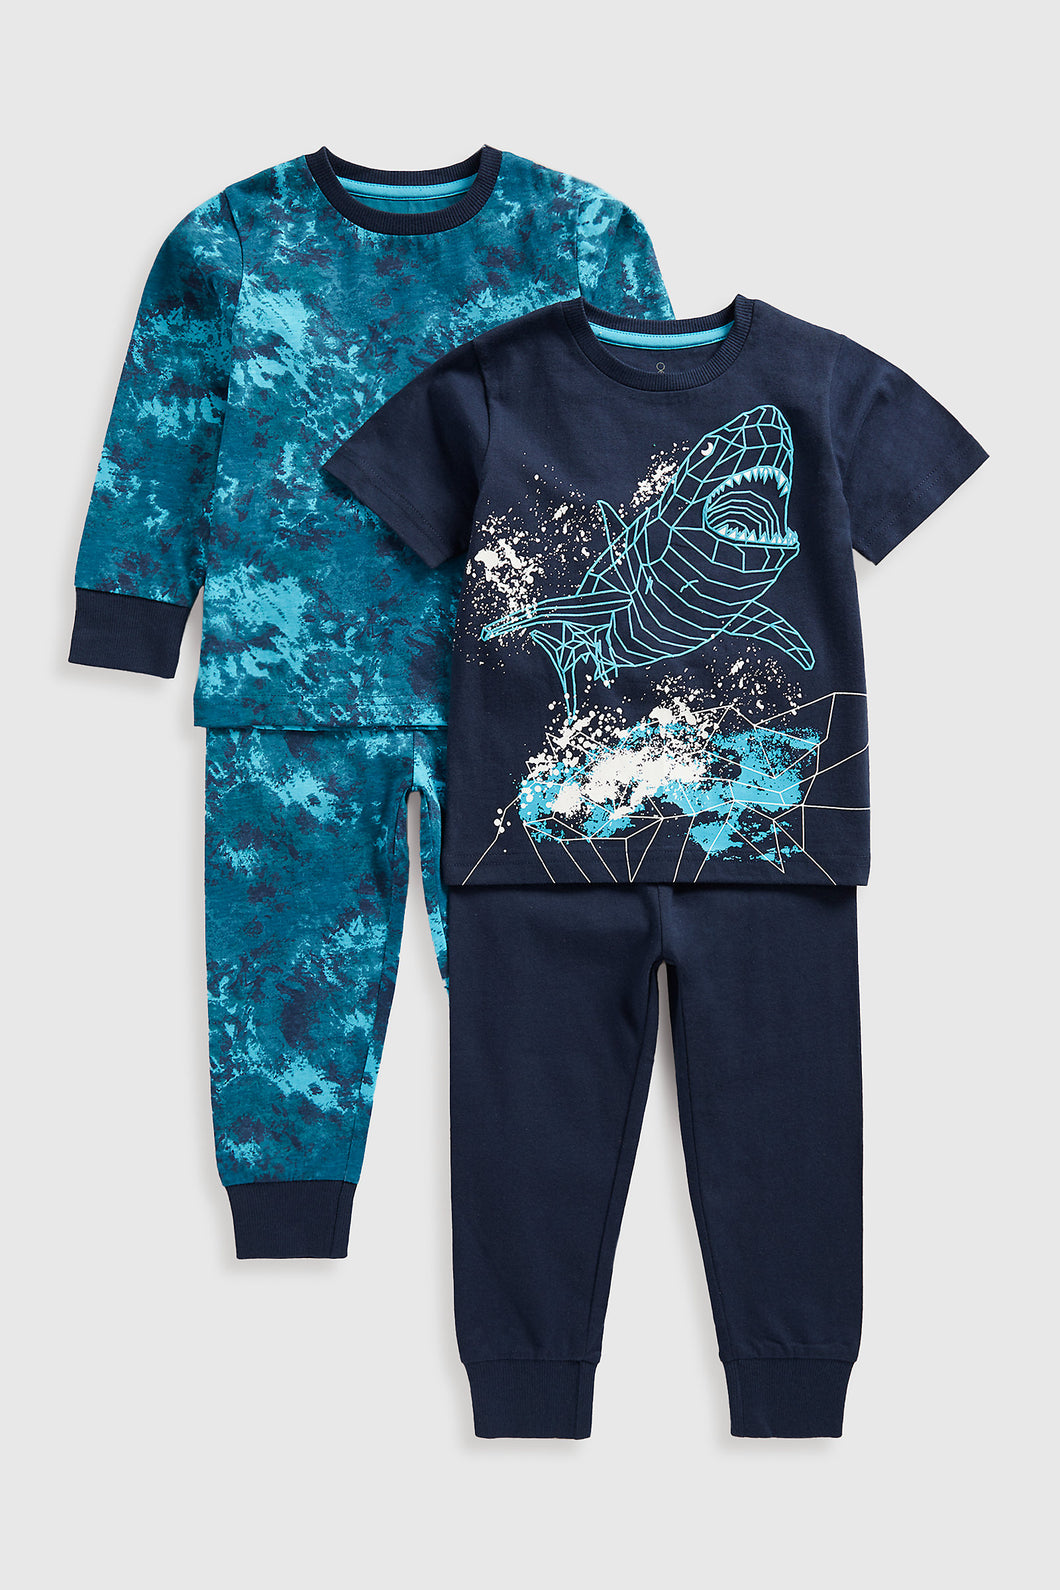 Mothercare Shark Long And Short Sleeved Pyjamas - 2 Pack